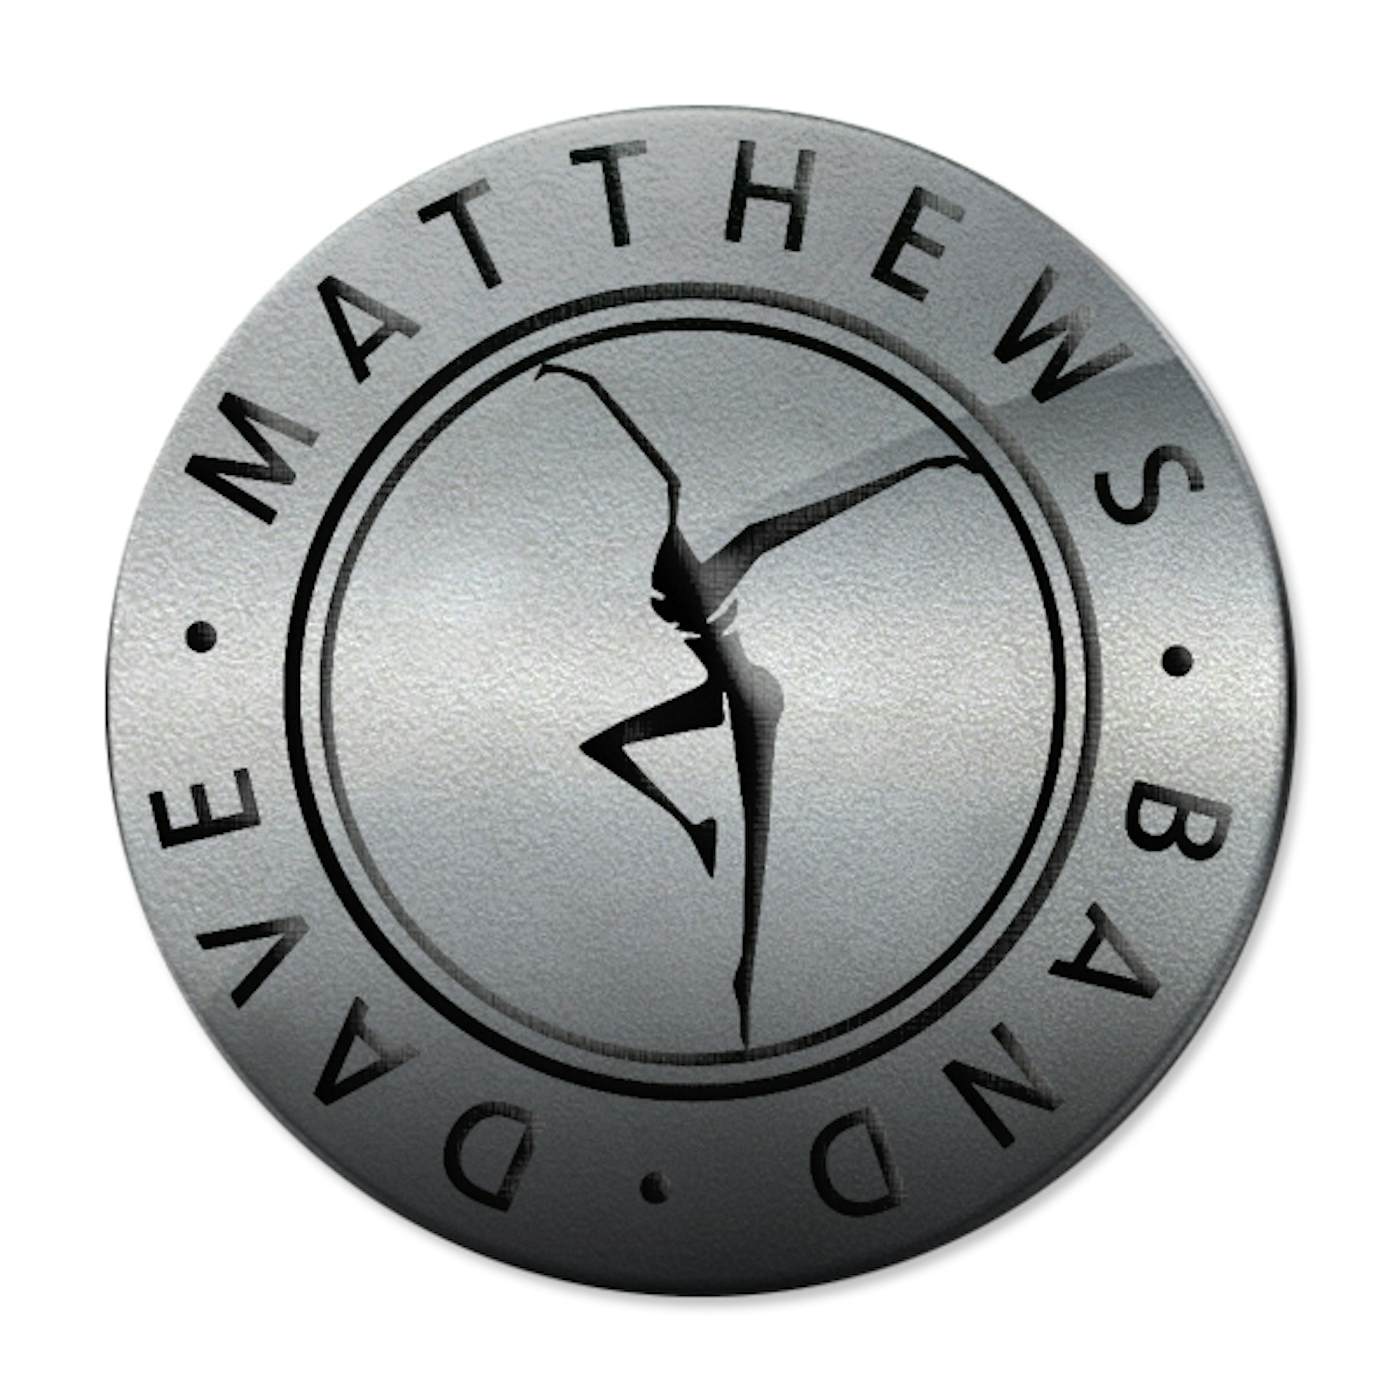 Dave Matthews Band Car Emblem